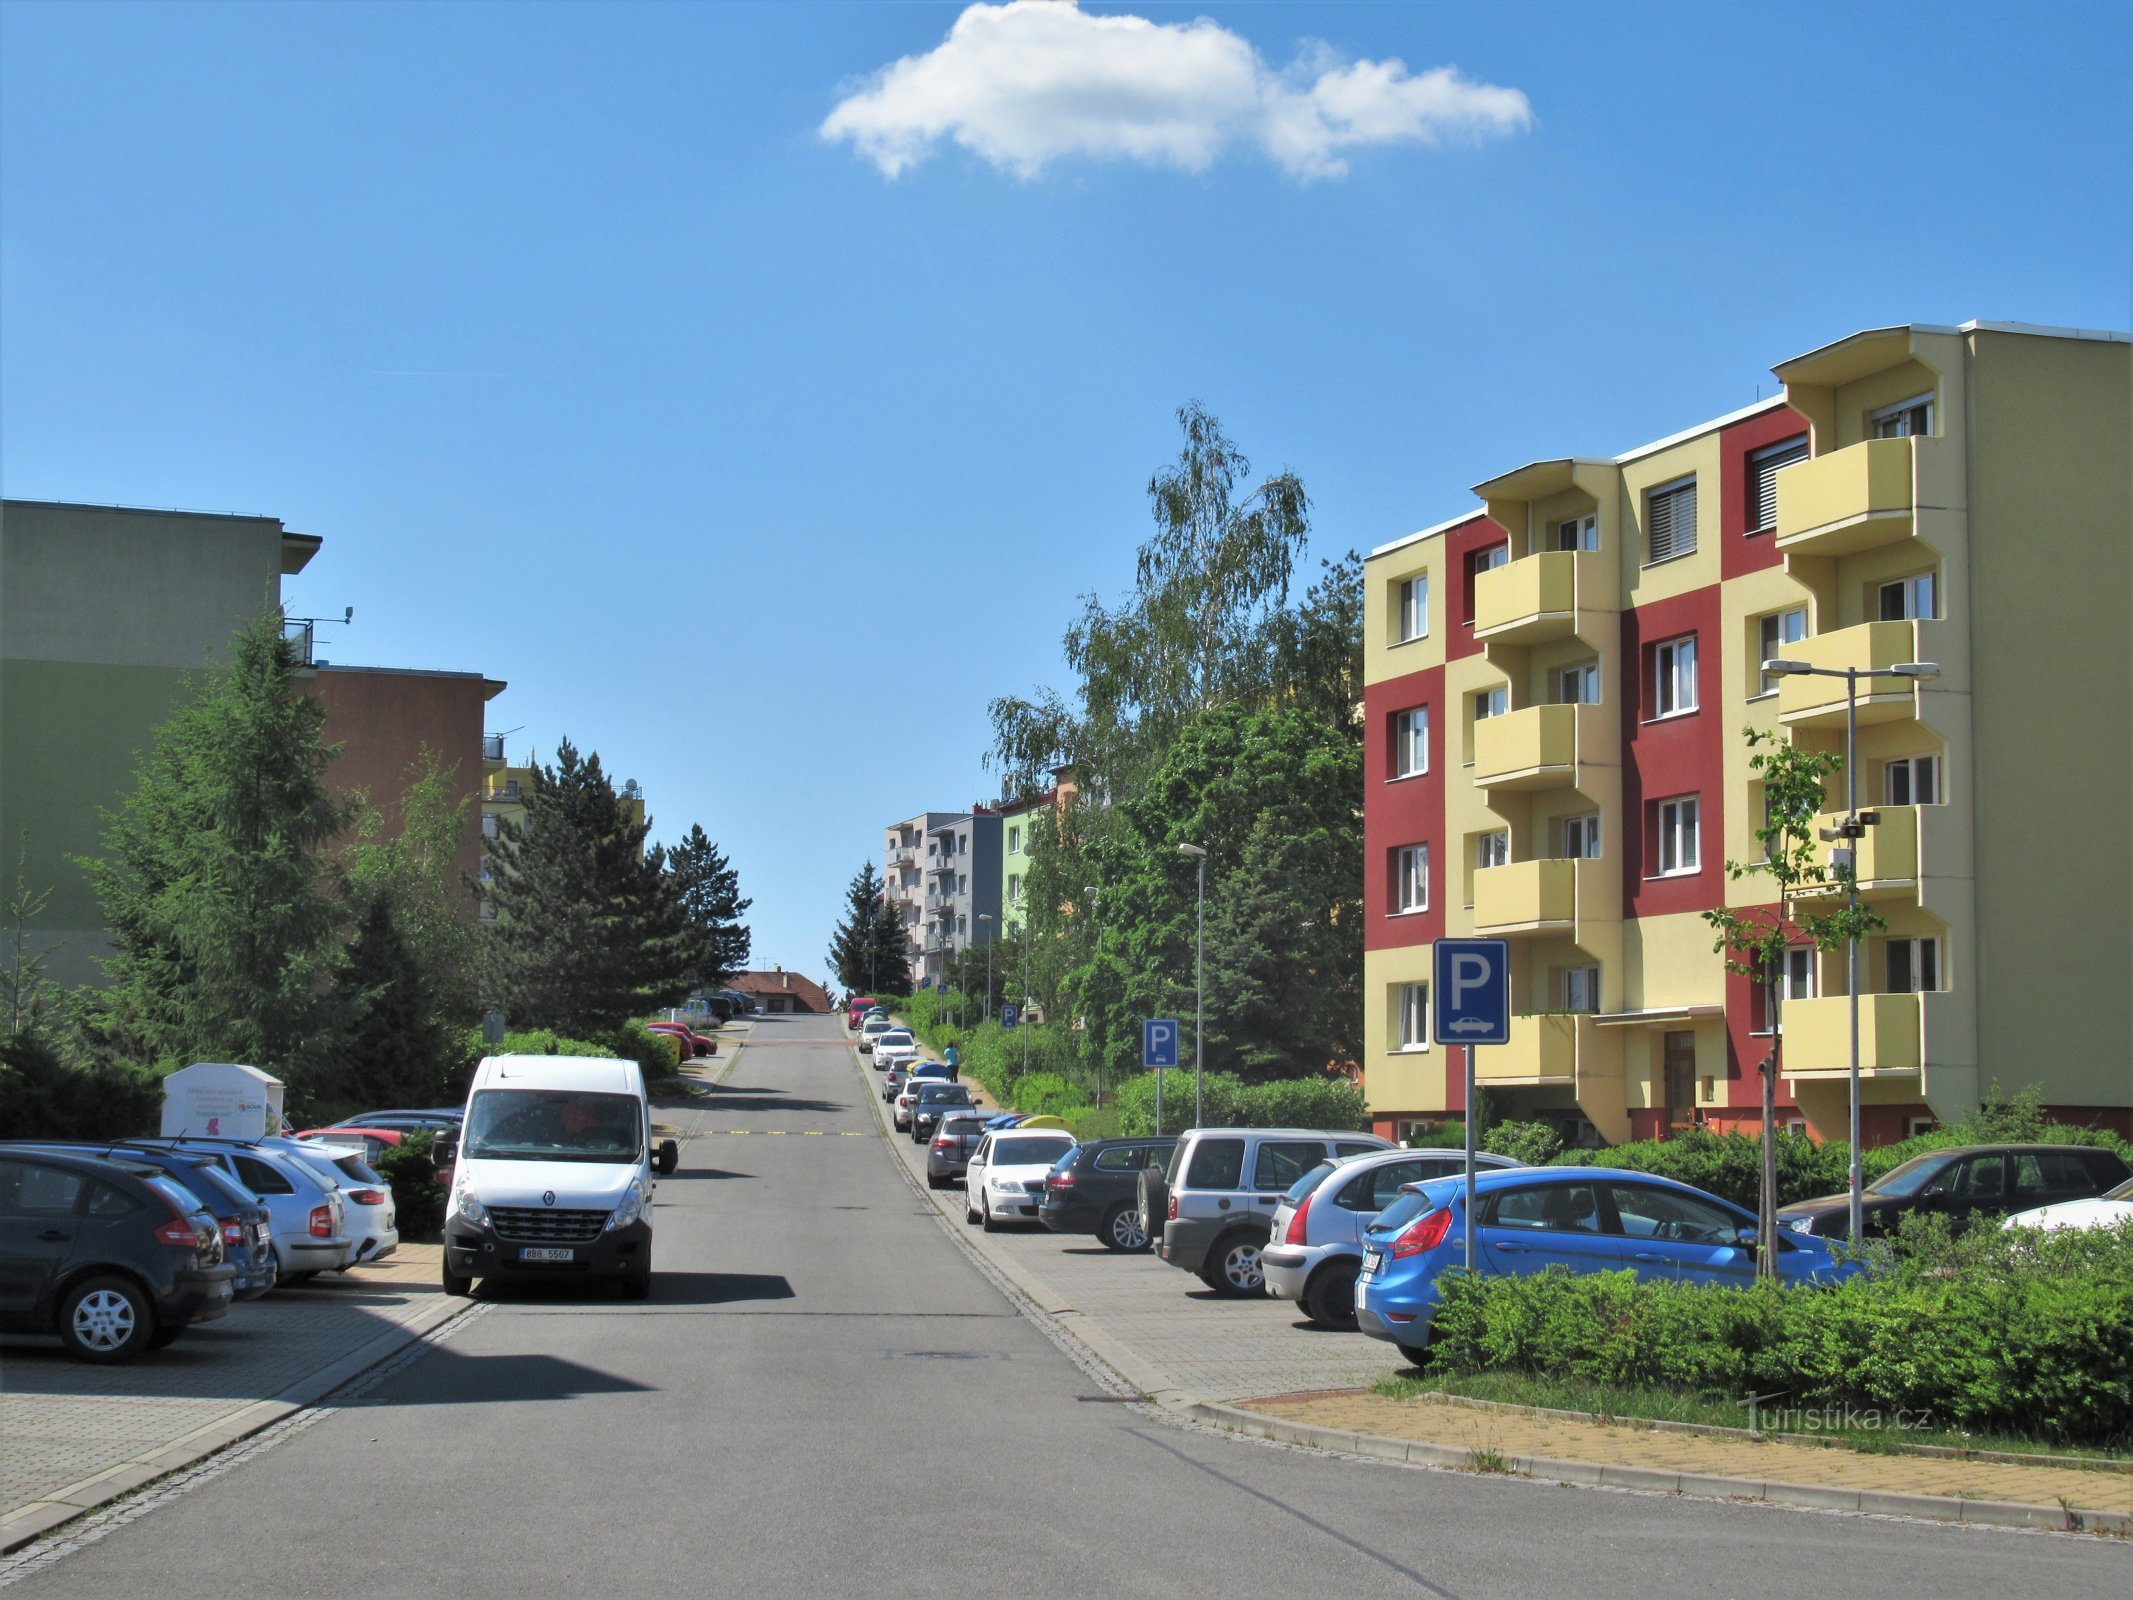 Kopánky通りはU koupaliště交差点に通じています